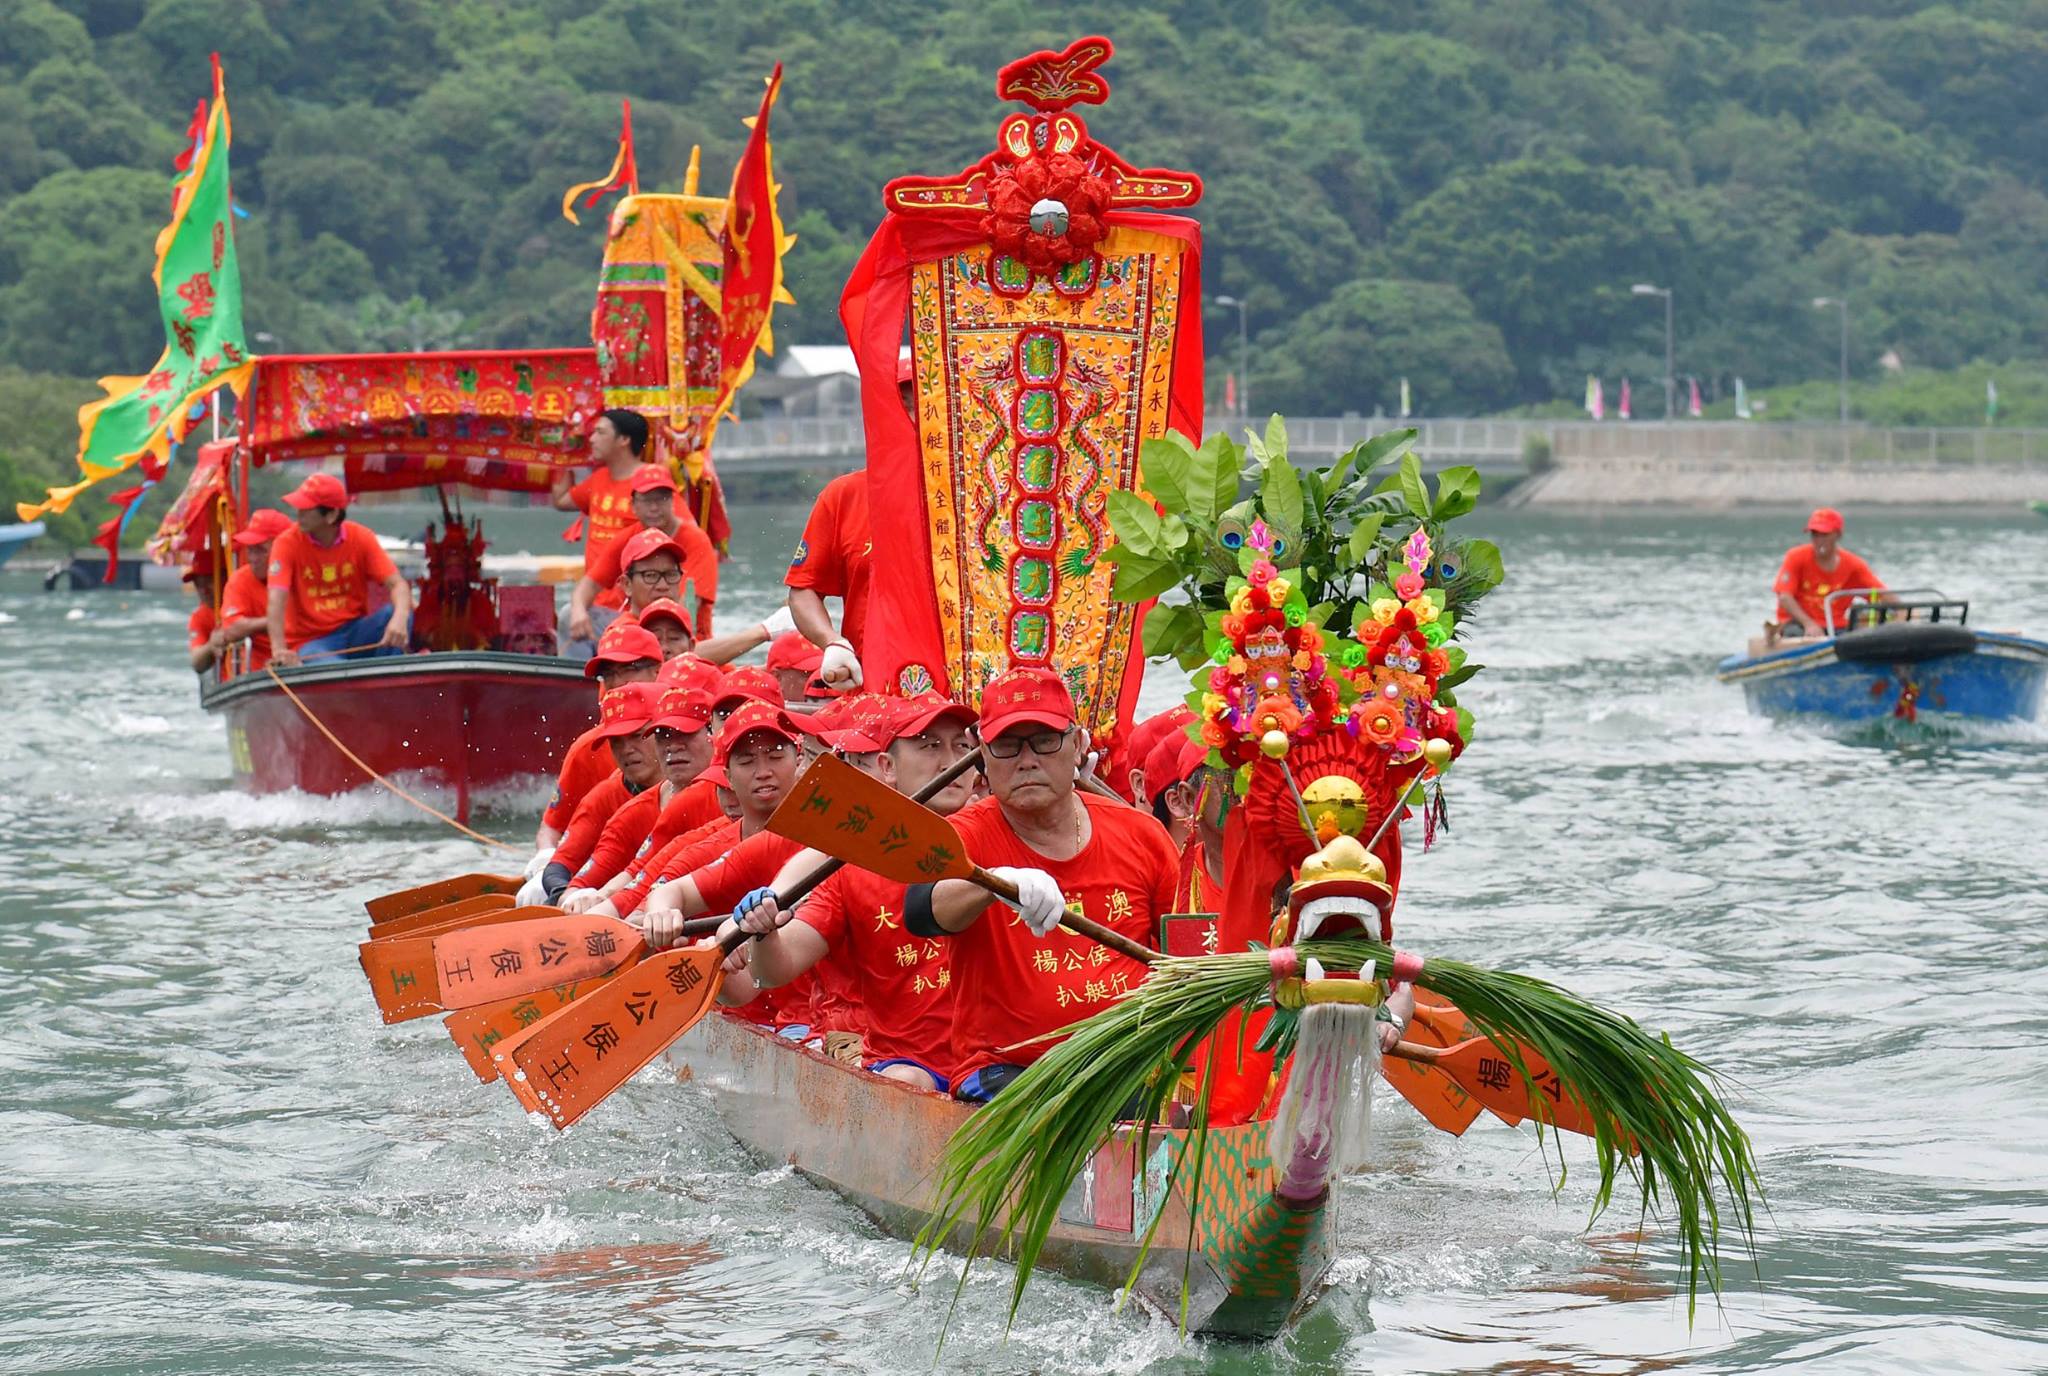 Hong Kong Dragon Boat Festival 2023